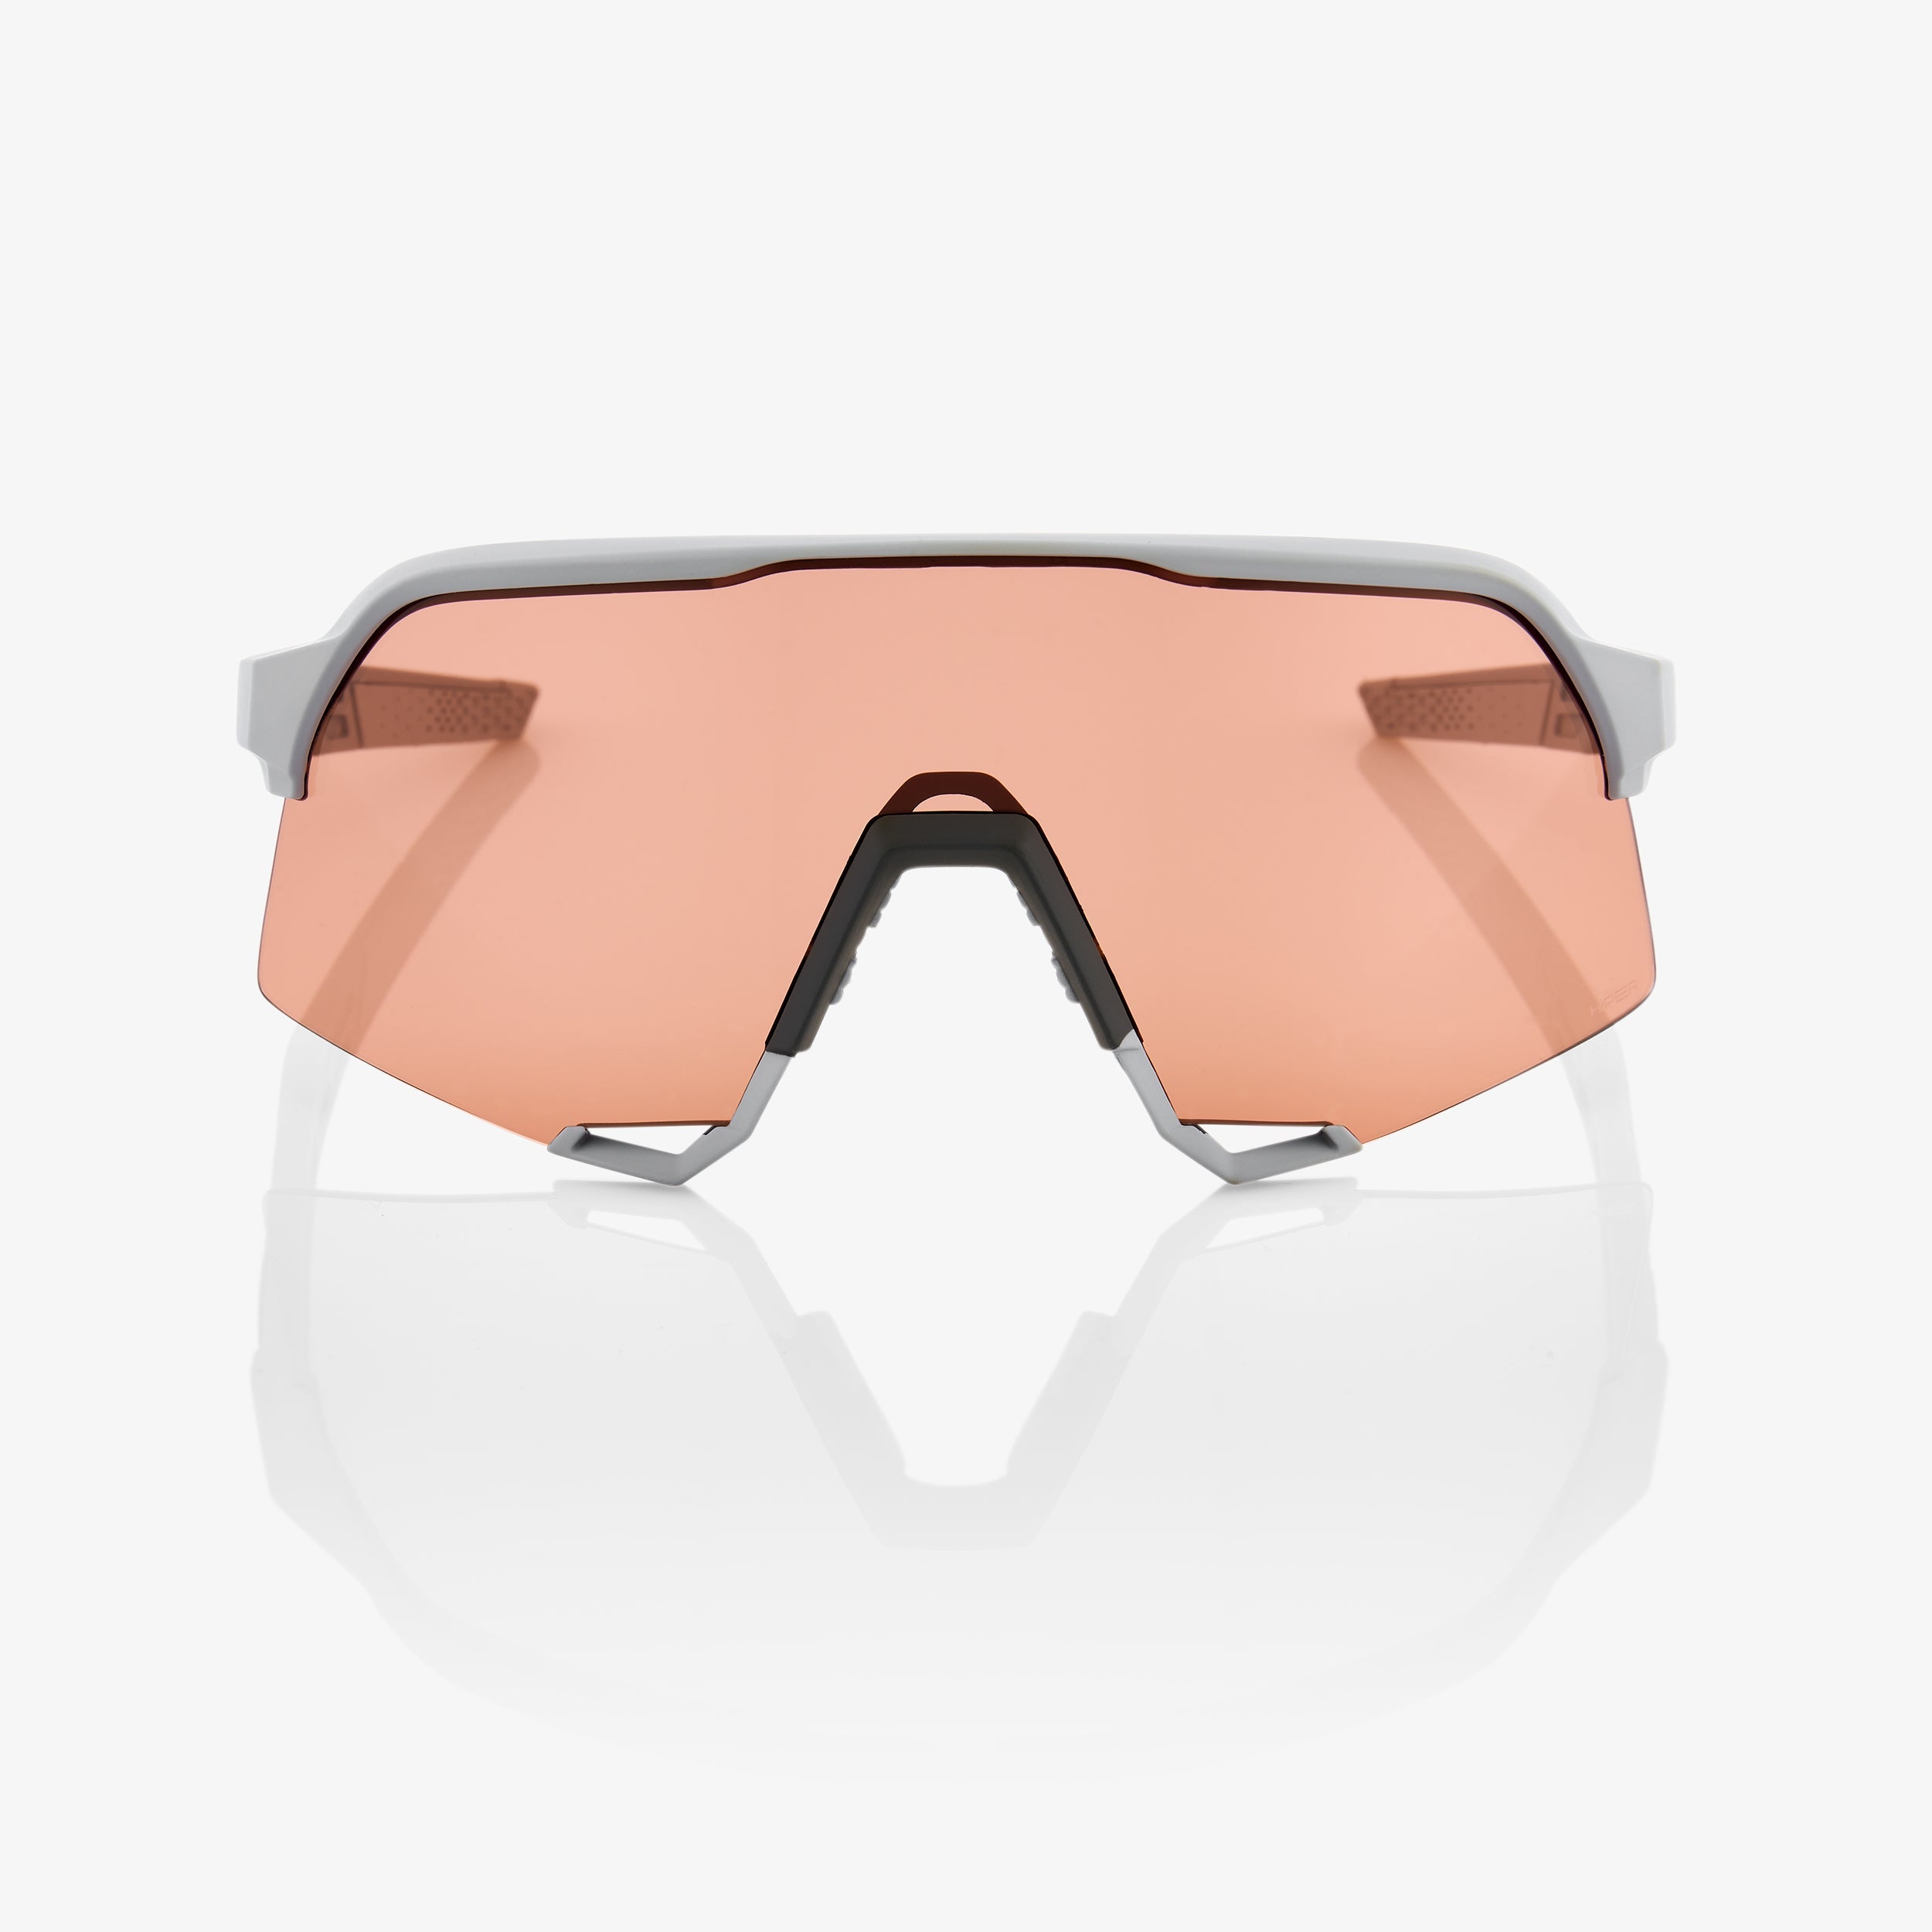 S3 - Soft Tact Stone Grey - HiPER Coral Lens – 100%